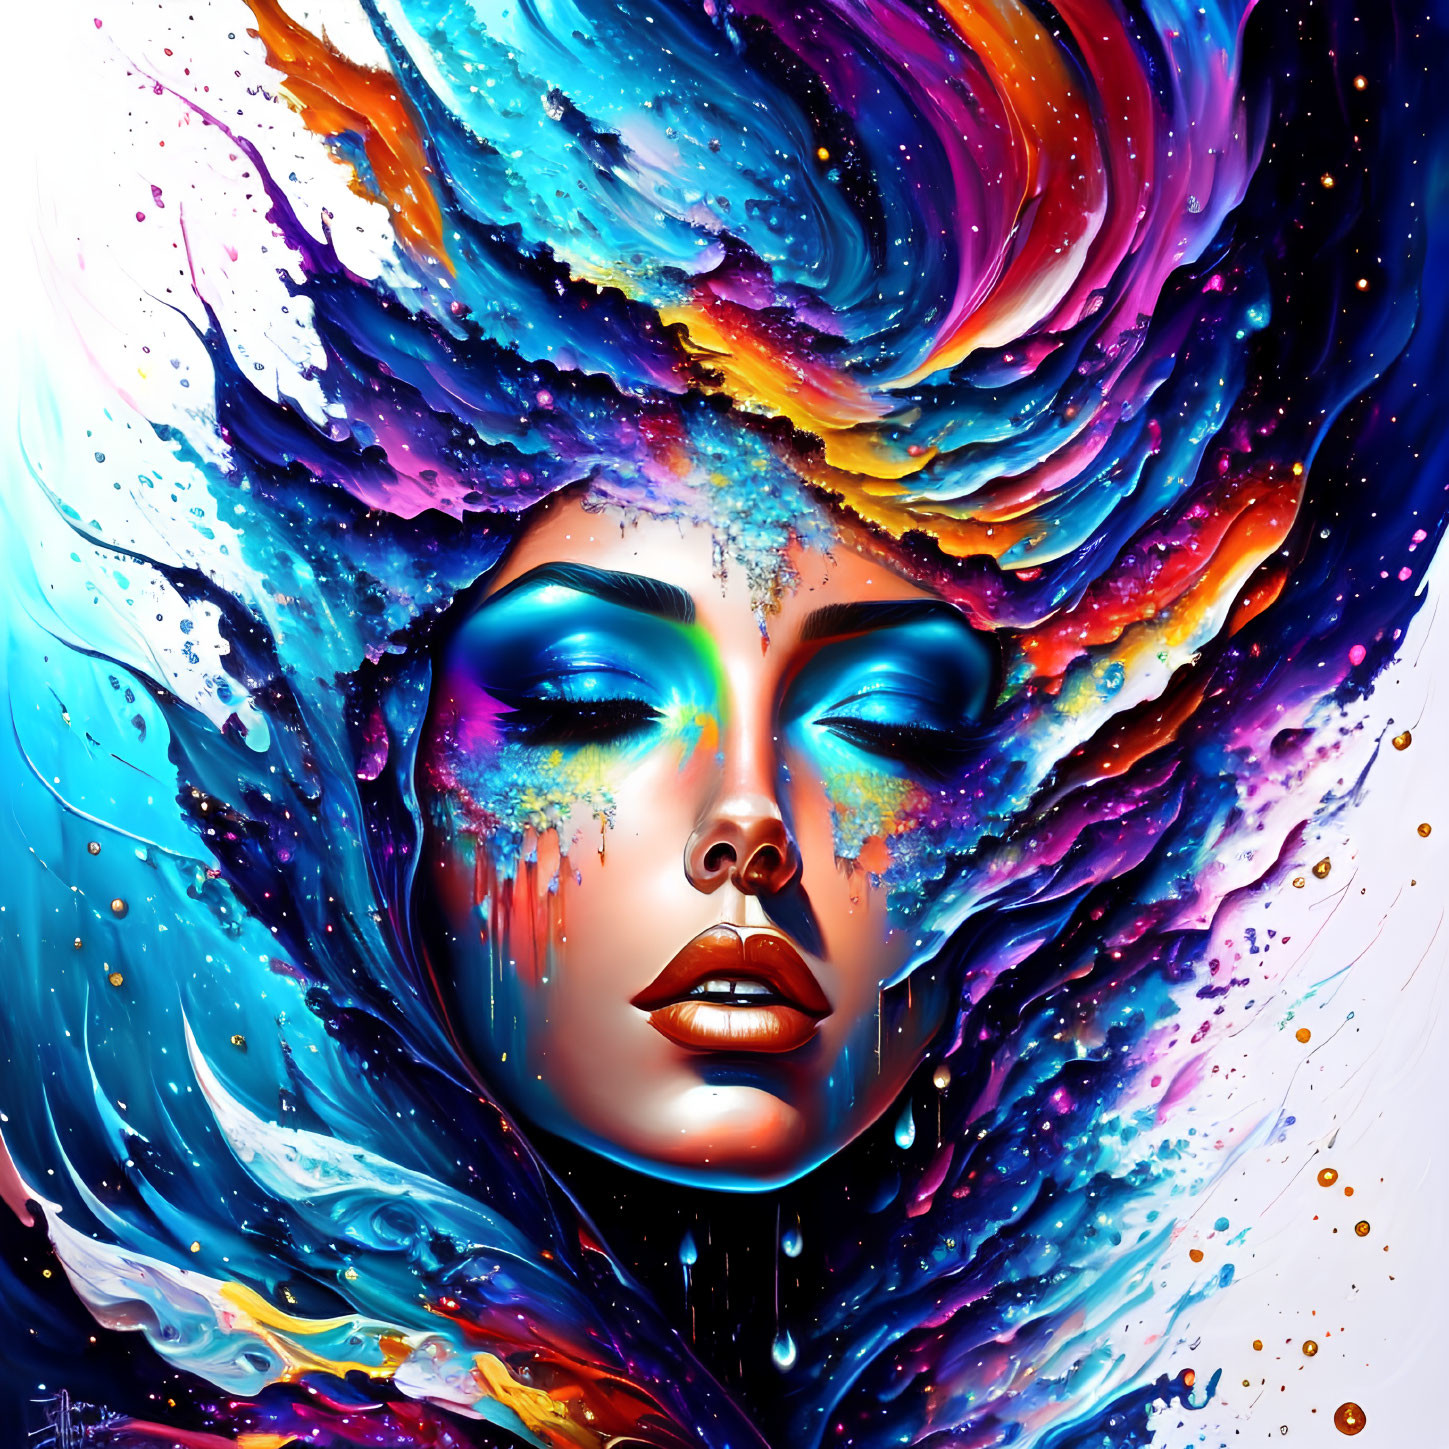 Colorful digital artwork: woman's face in cosmic swirl